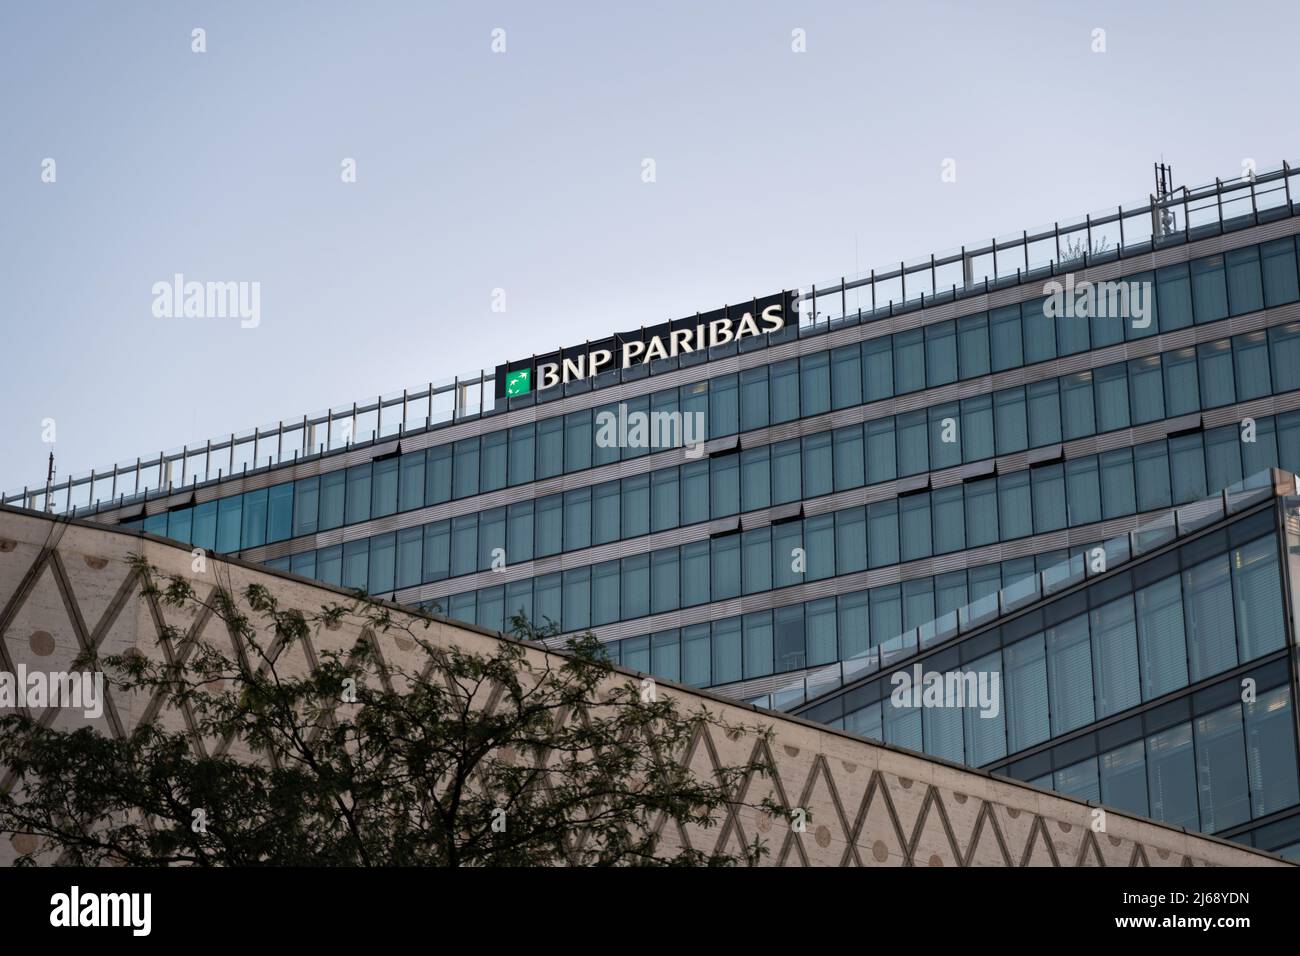 Bnp paribas bank building -Fotos und -Bildmaterial in hoher Auflösung –  Alamy